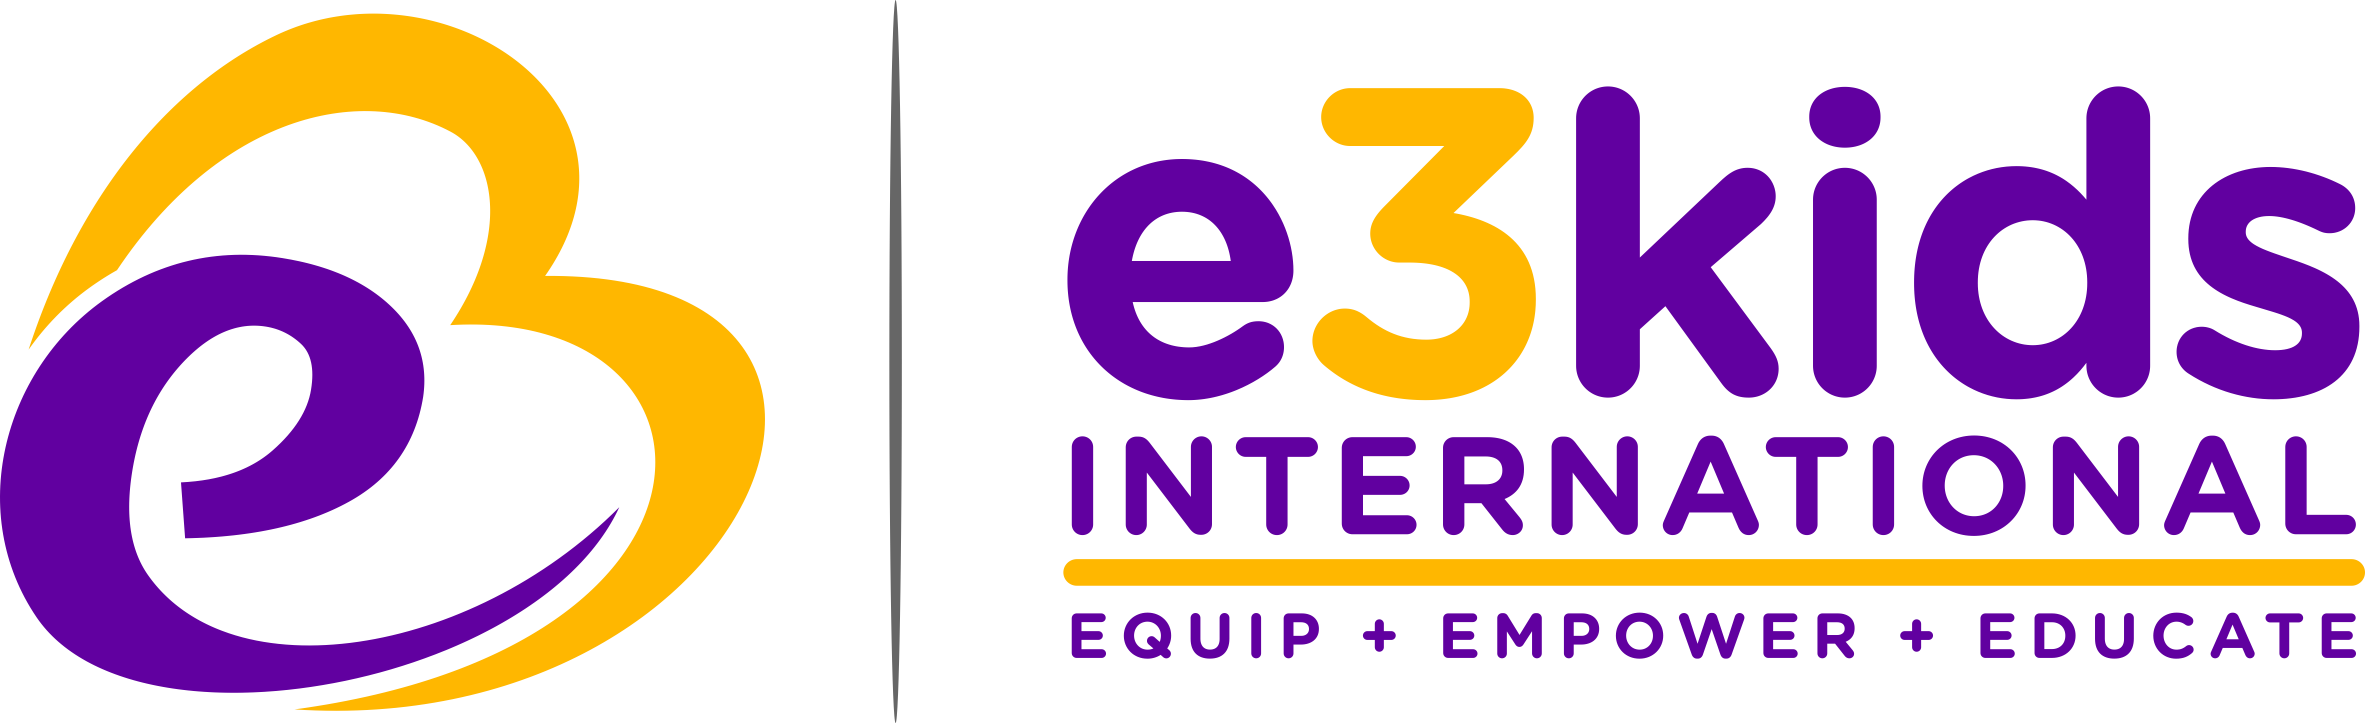 e3kids International logo